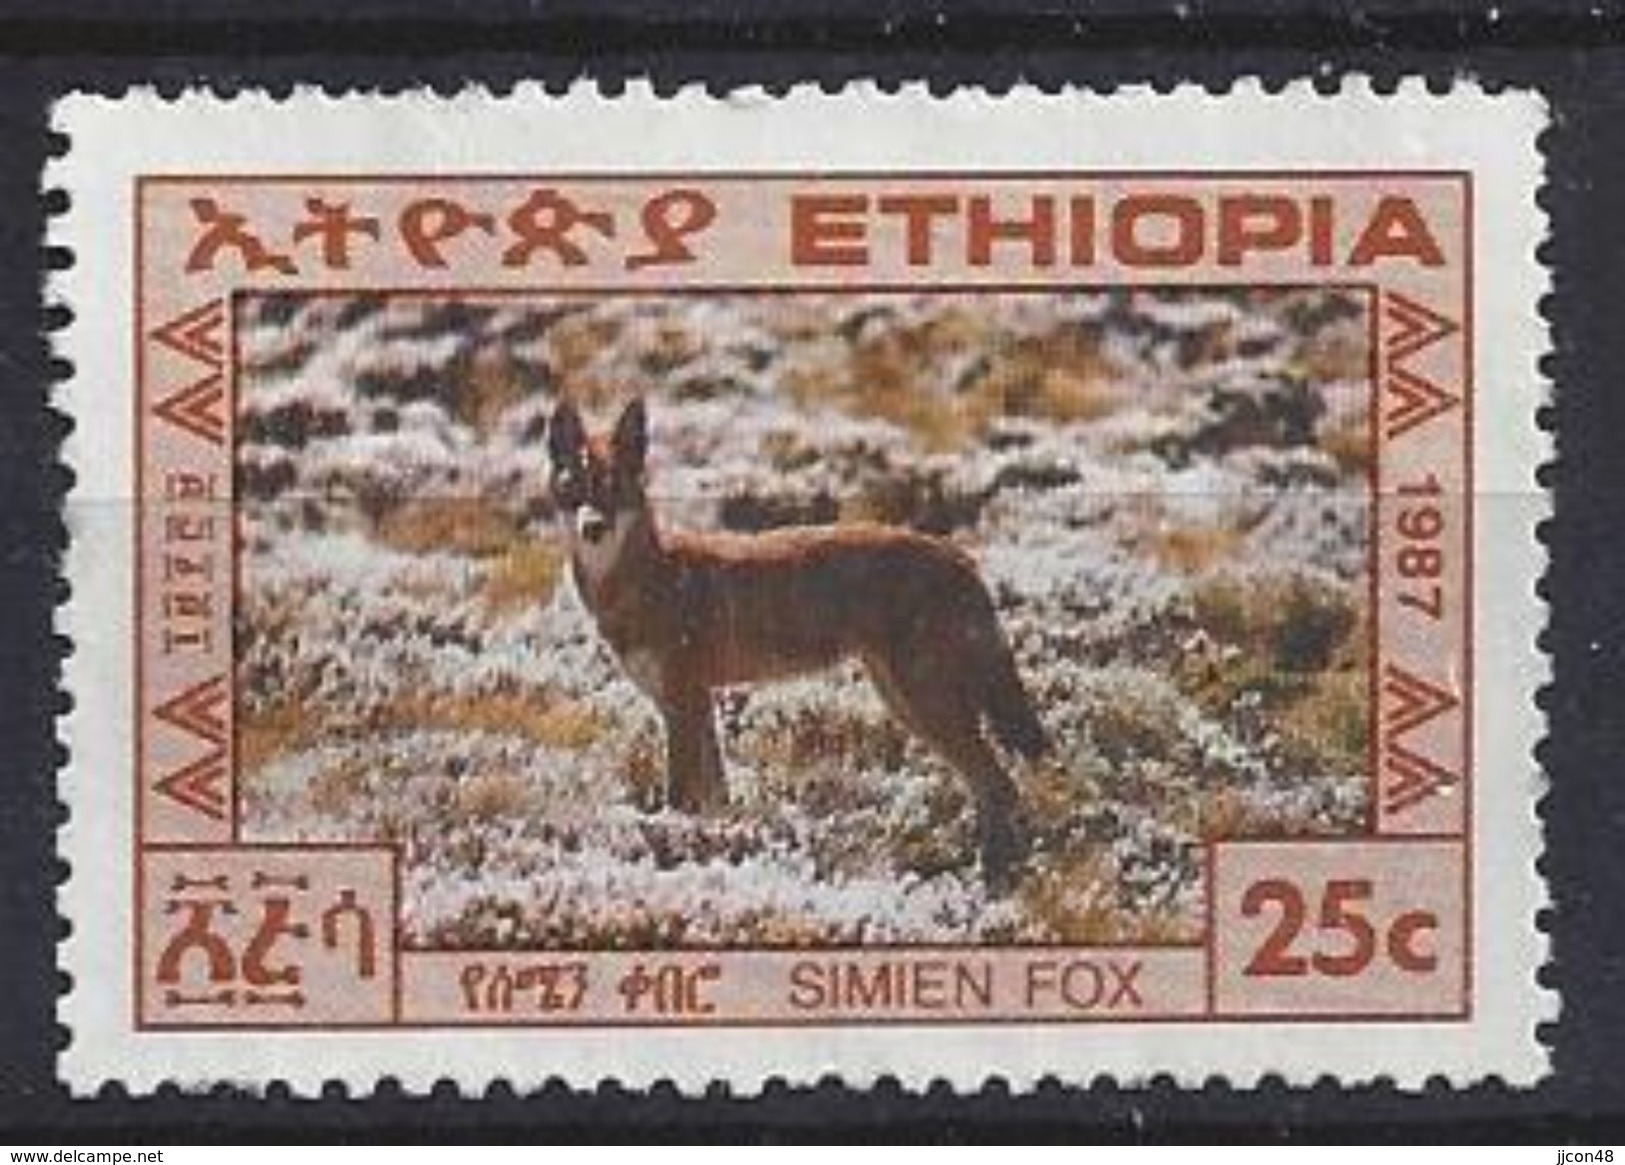 Ethiopia 1987  Simien Fox 25c (o) - Ethiopia